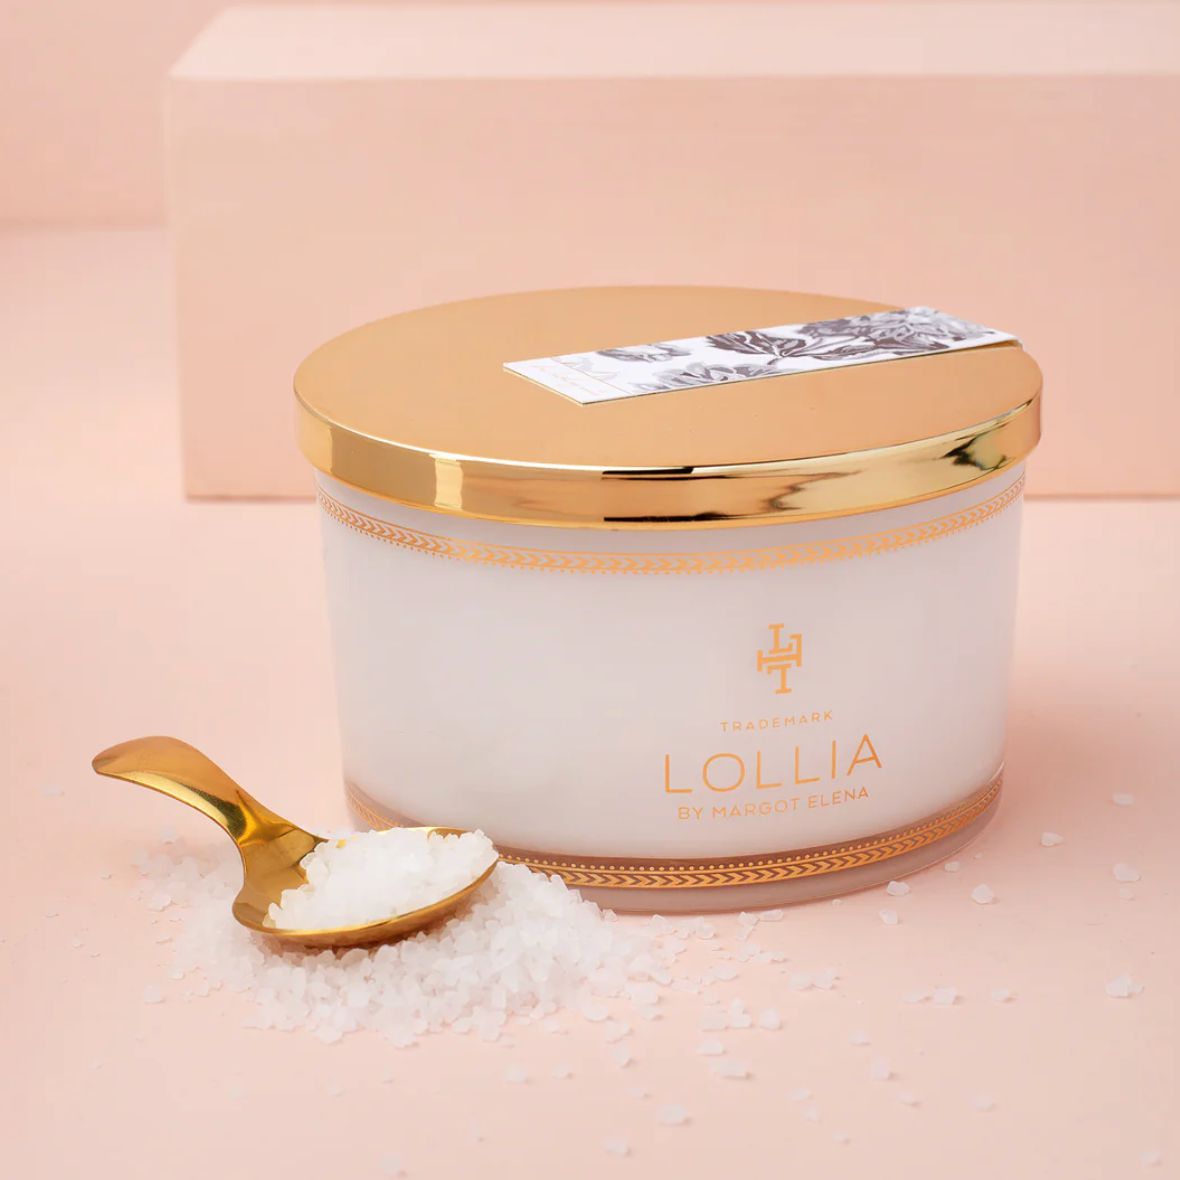 Lollia Elegance Bath Salt 10ZJ-Scent-Margot Elena-Anna Bella Fine Lingerie, Reveal Your Most Gorgeous Self!